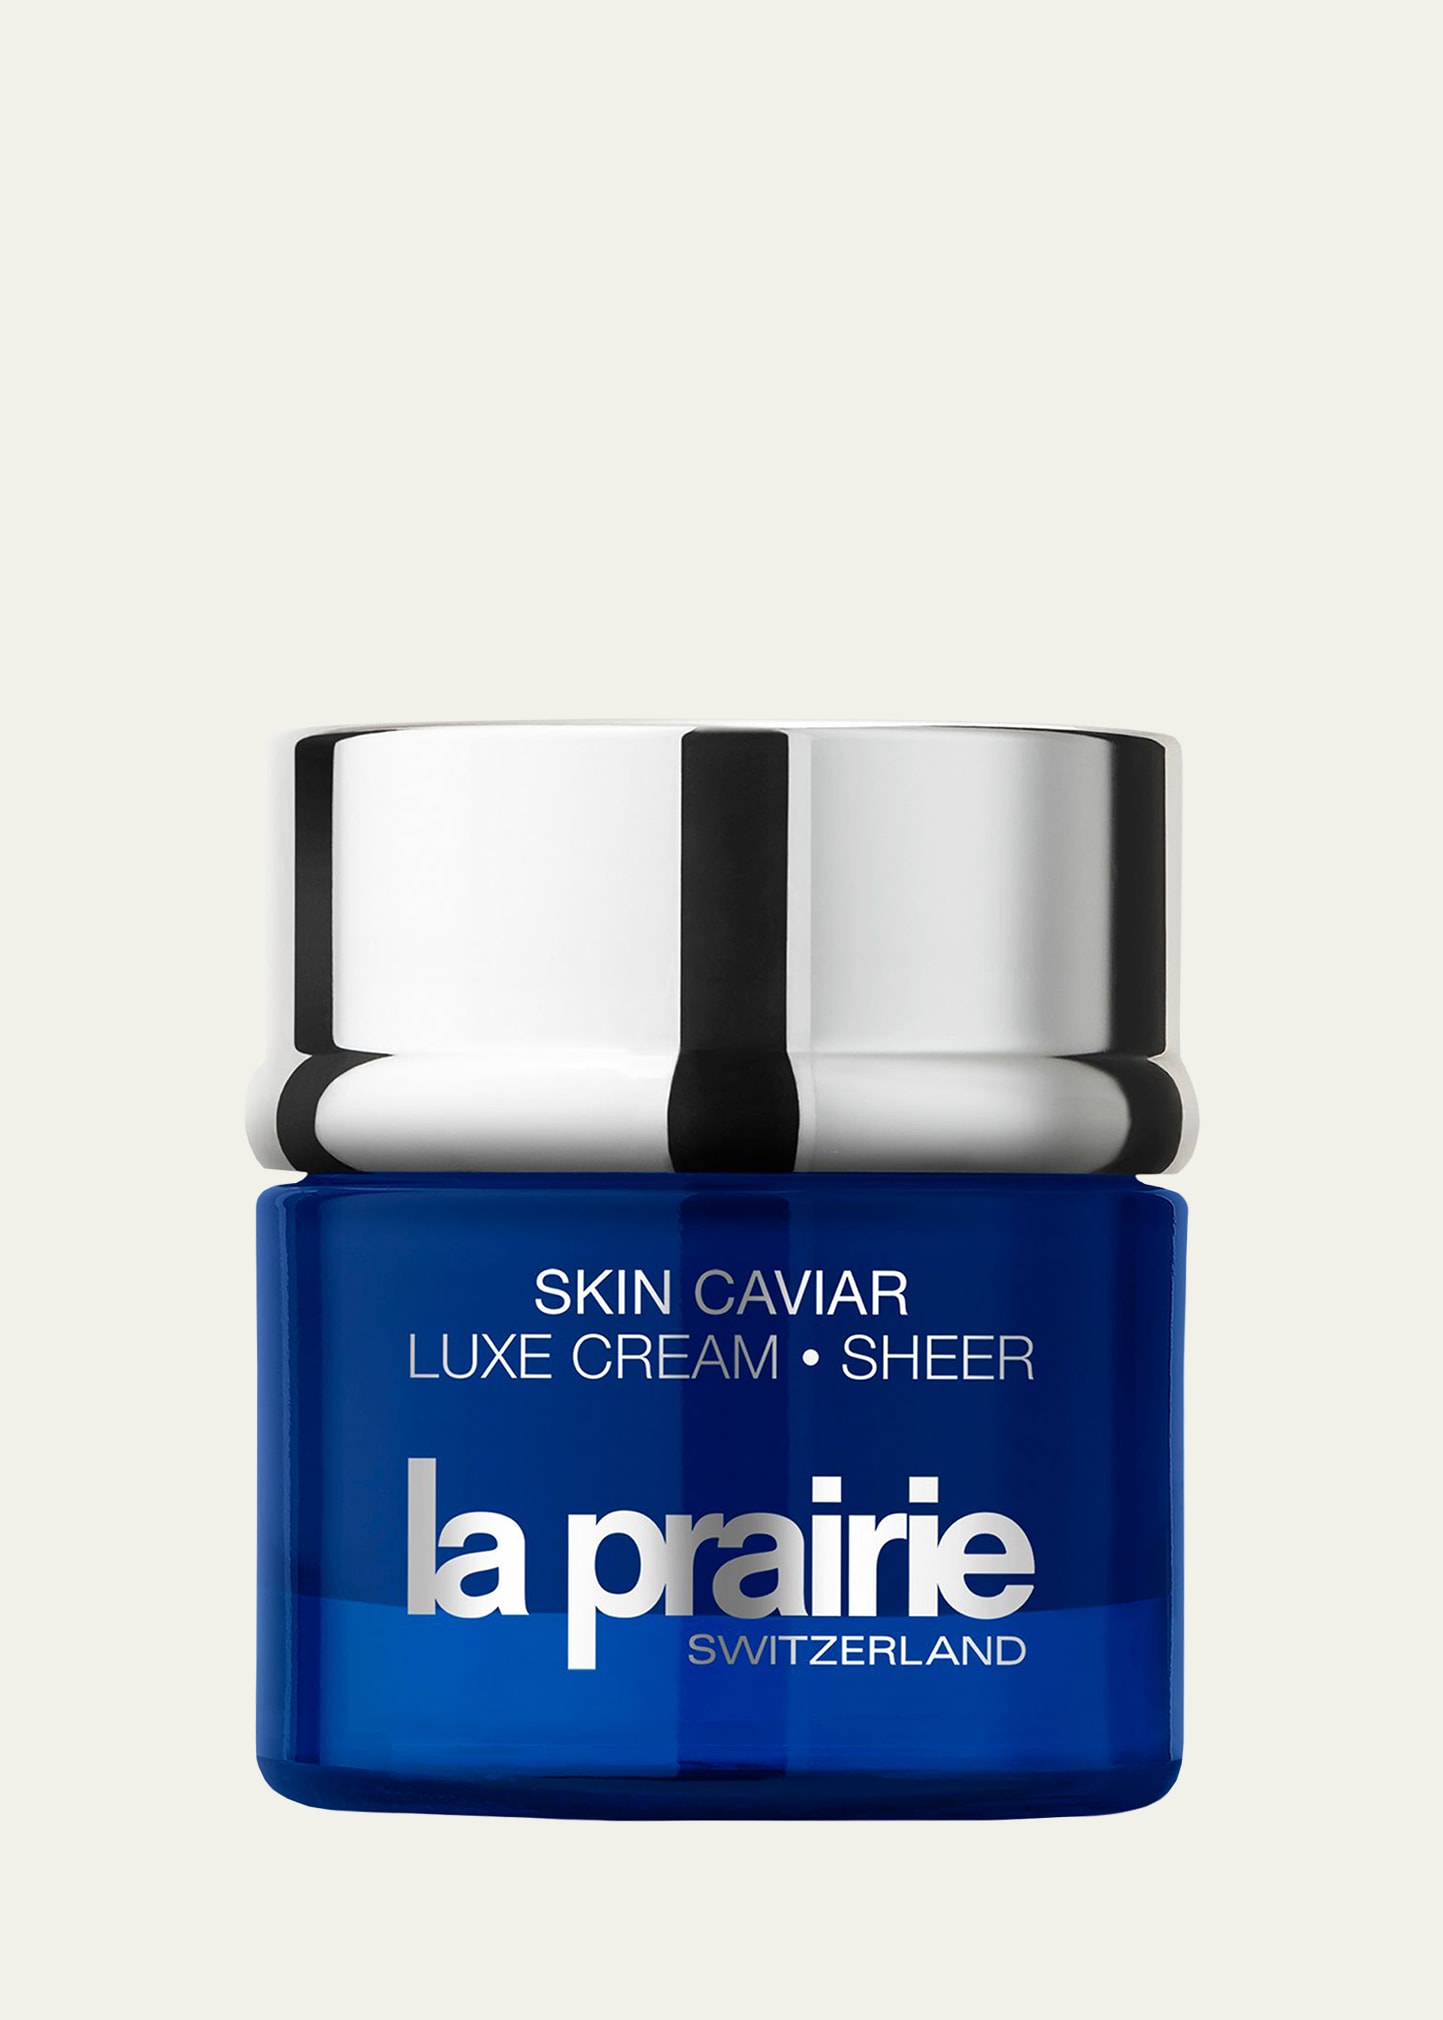 Skin Caviar Luxe Cream Sheer, 3.4 oz.